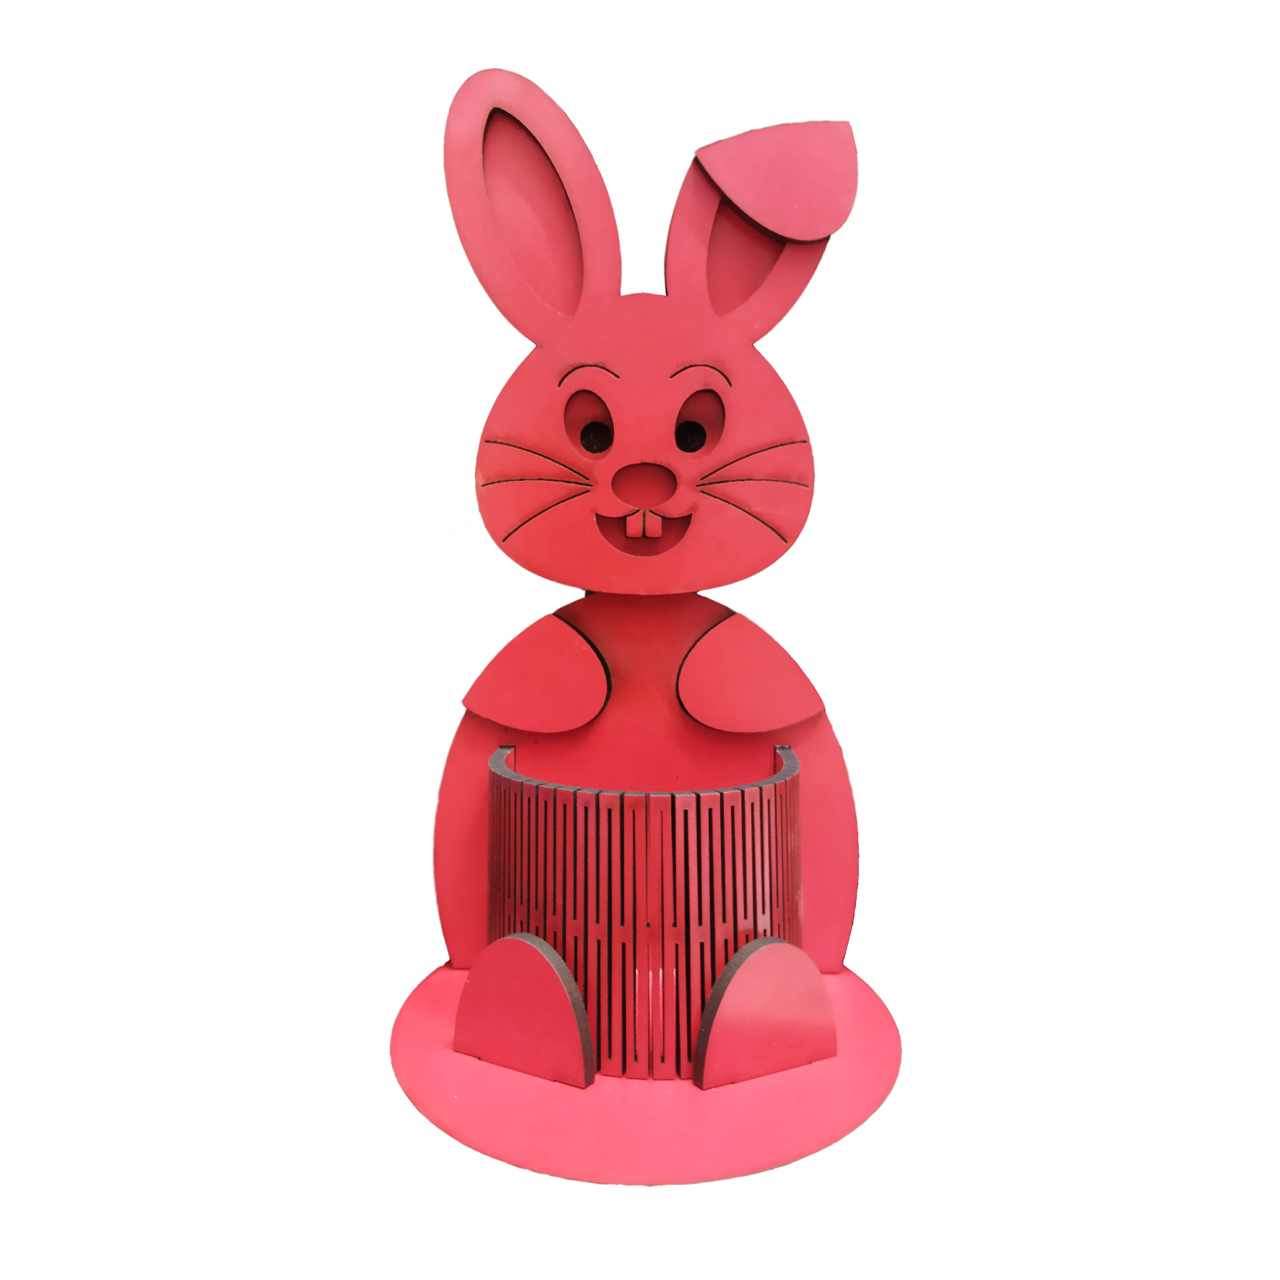 جامدادی رومیزی مدل خرگوش کد25